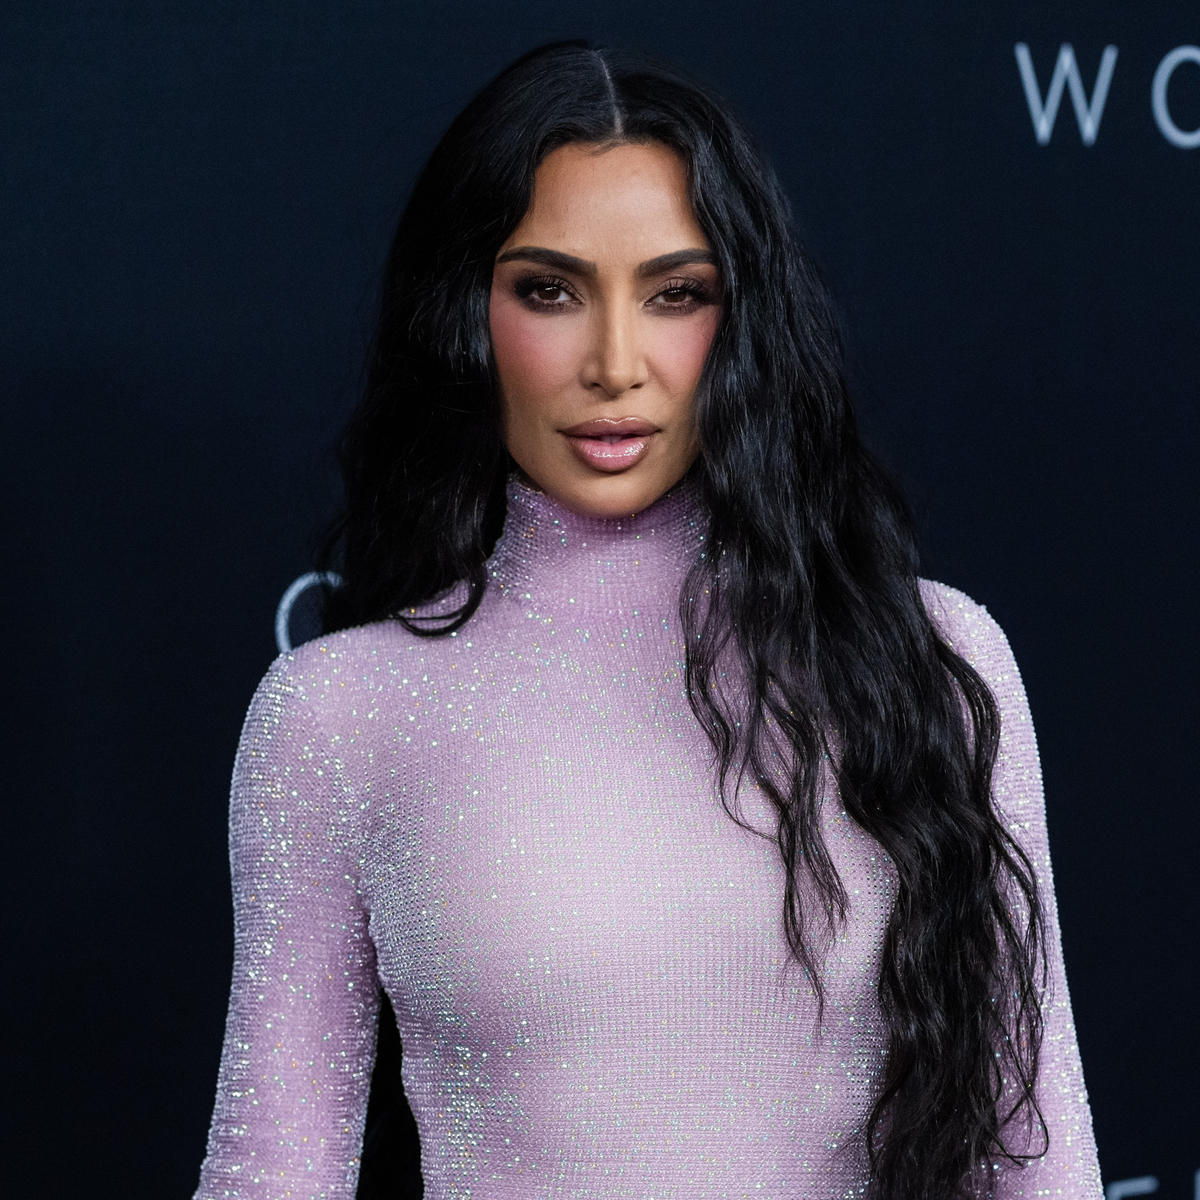 Kim Kardashian goes shopping in Gucci bra